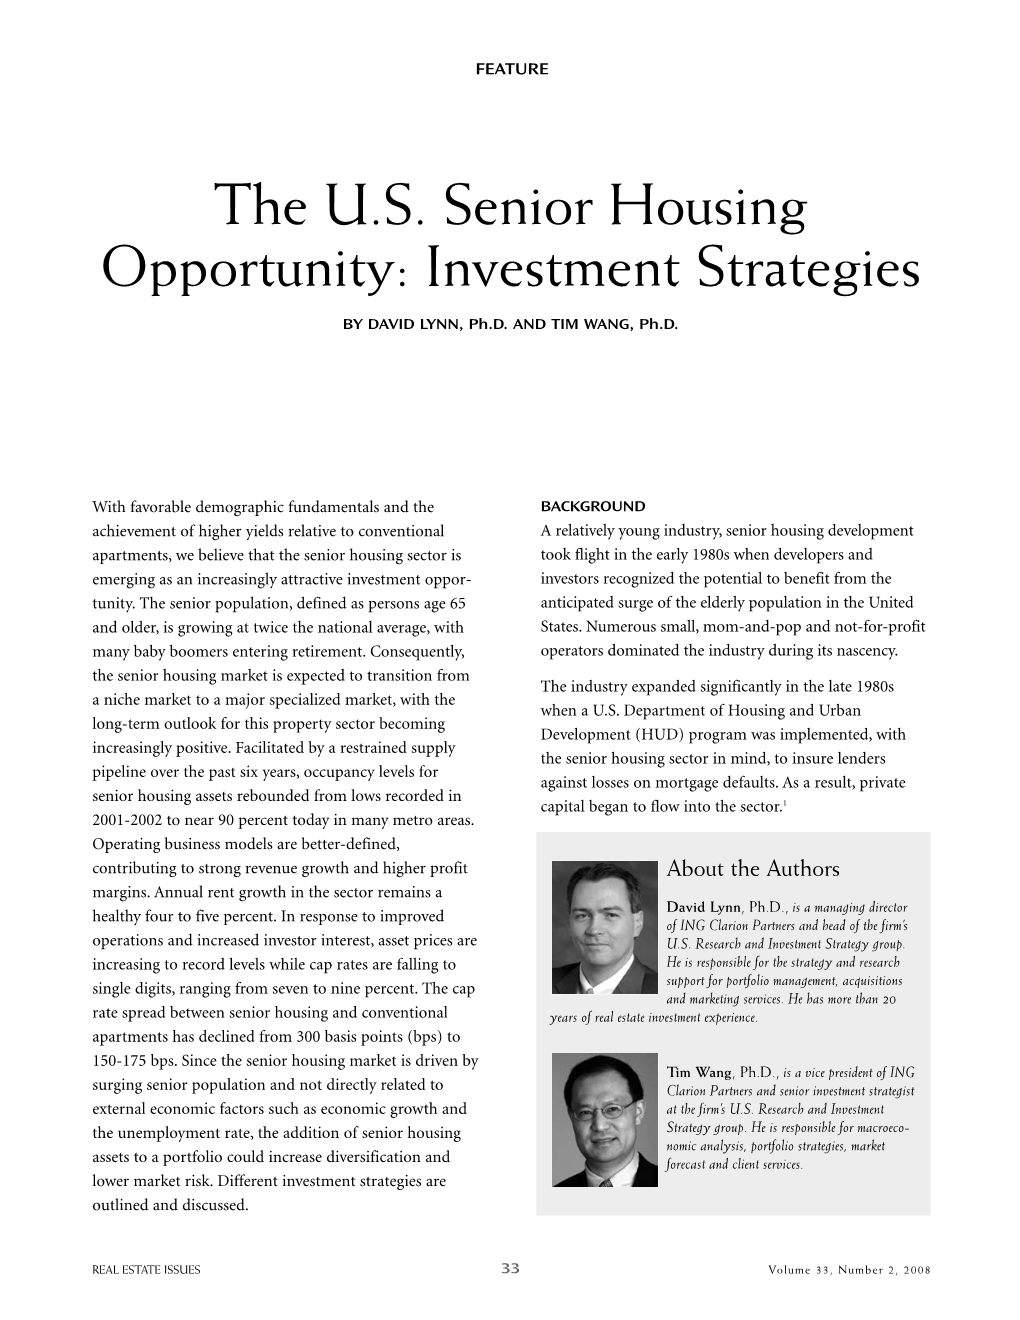 The U.S. Senior Housing Opportunity: Investment Strategies